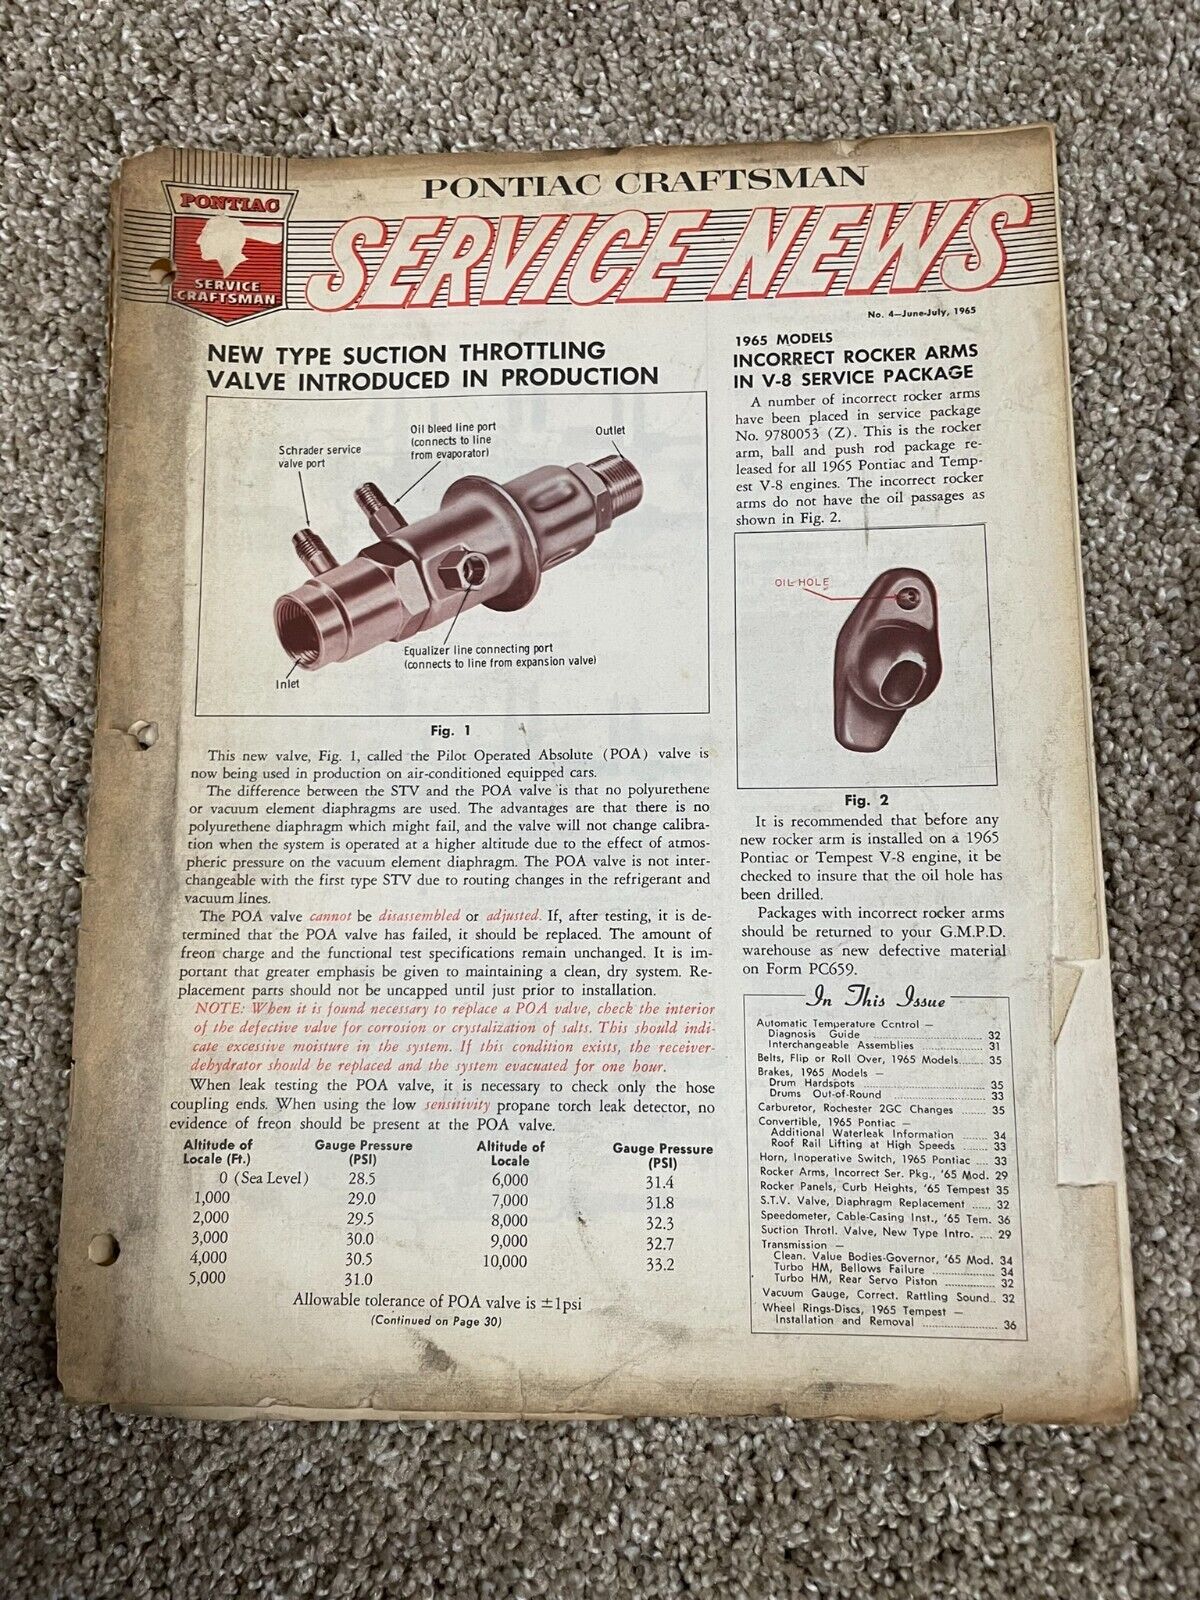 Pontiac Craftsman Service News #4  June-July 1965